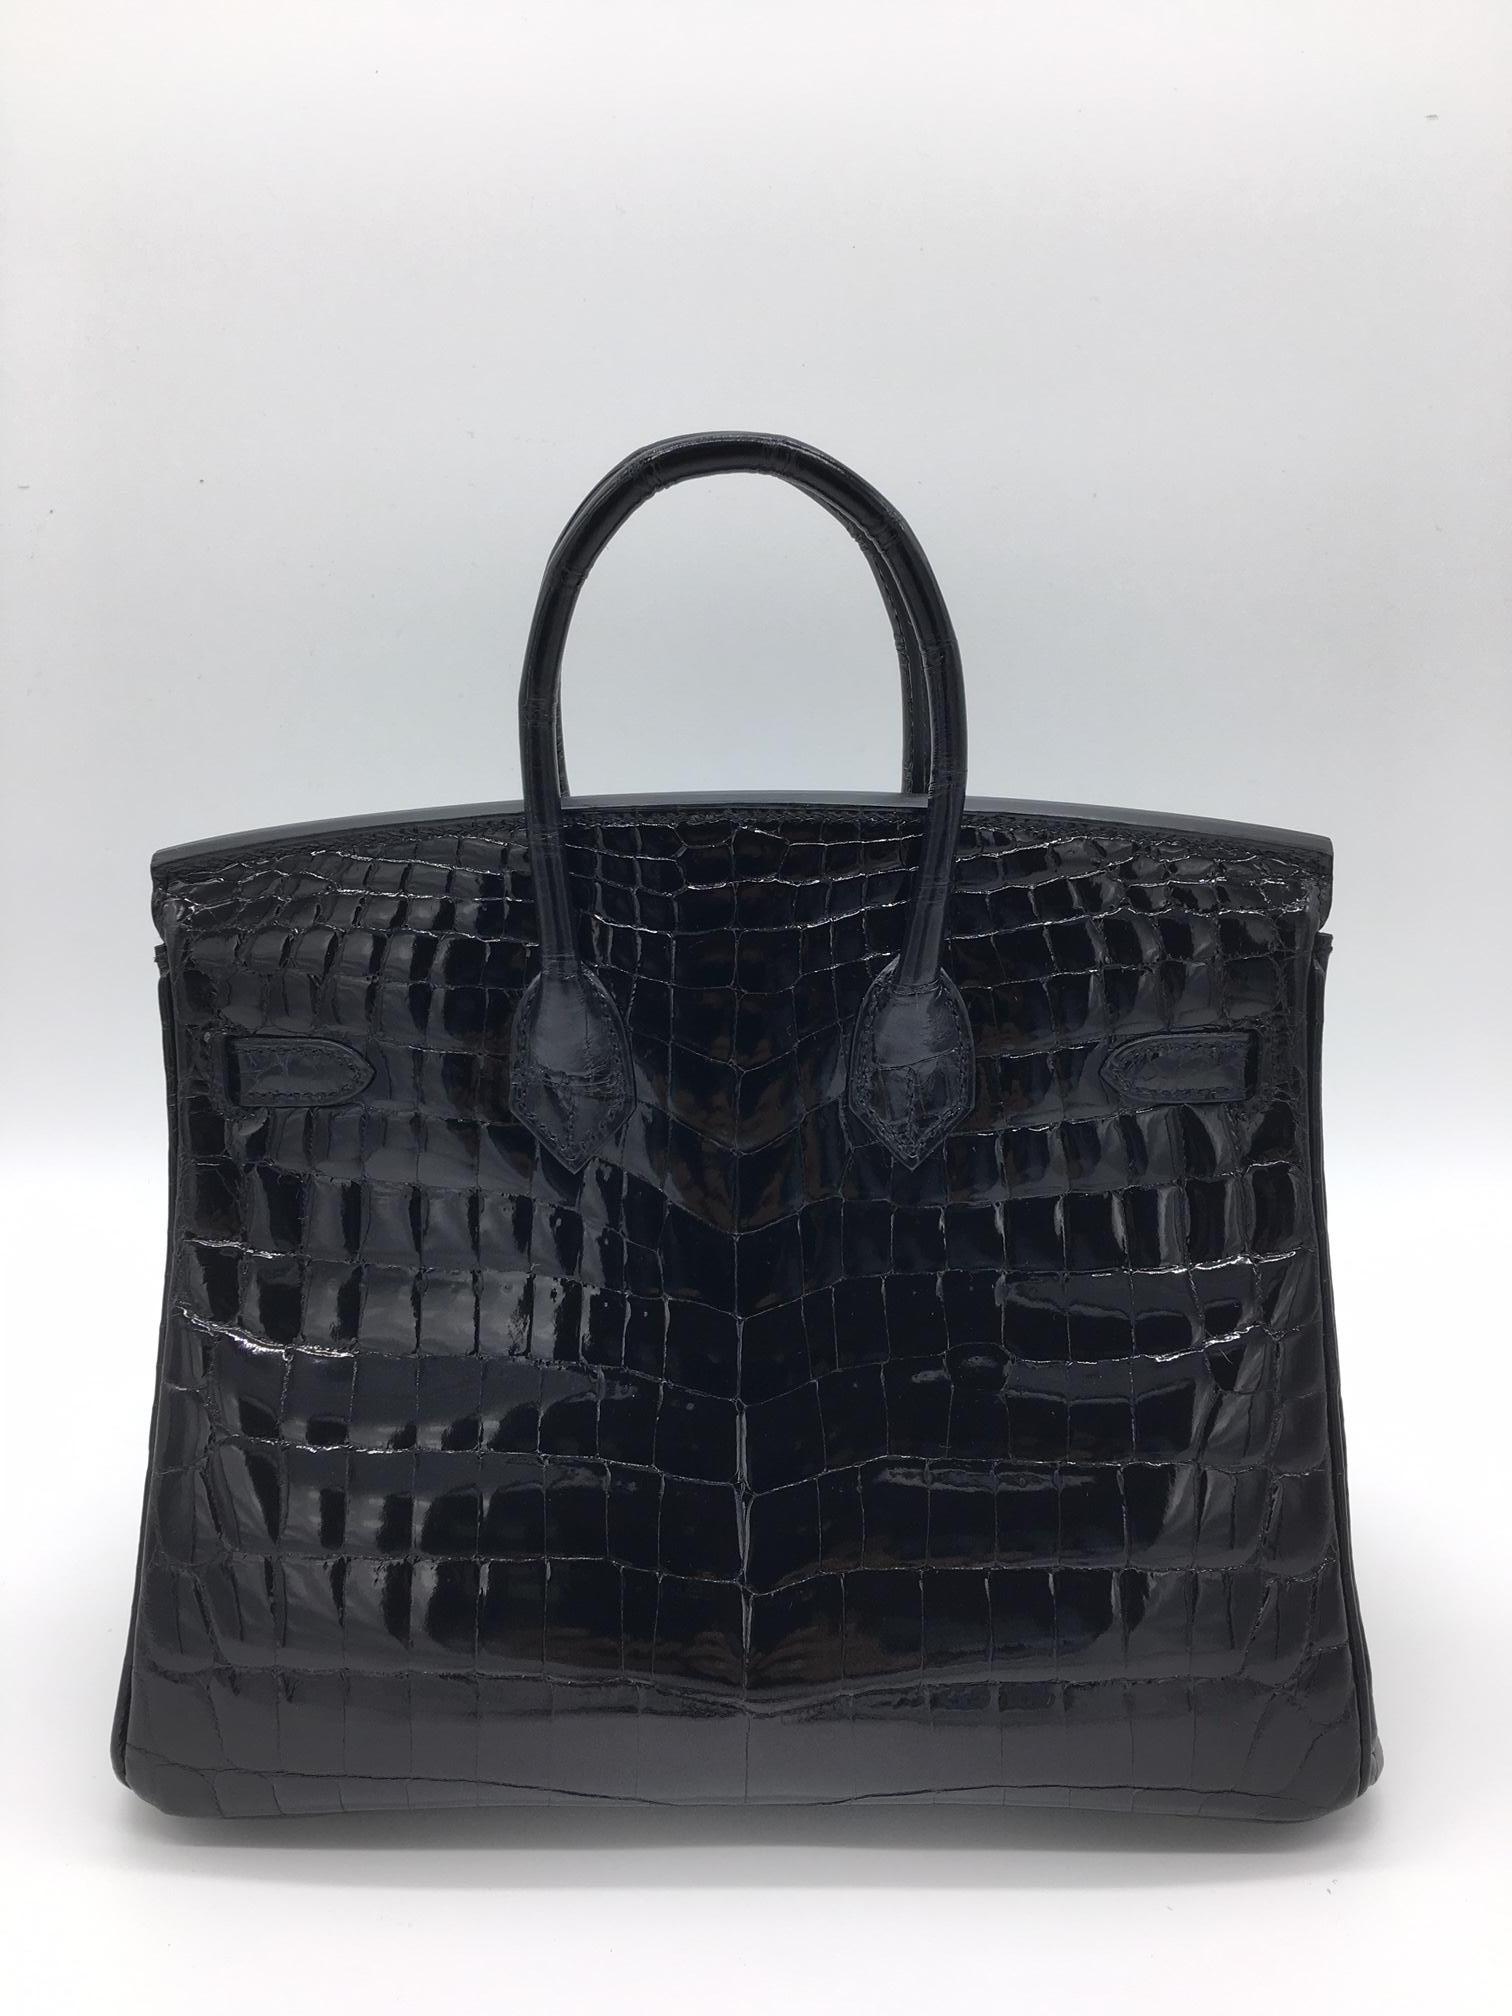 Hermes Black shiny crocodile Birkin 25cm Bag In New Condition For Sale In London, GB